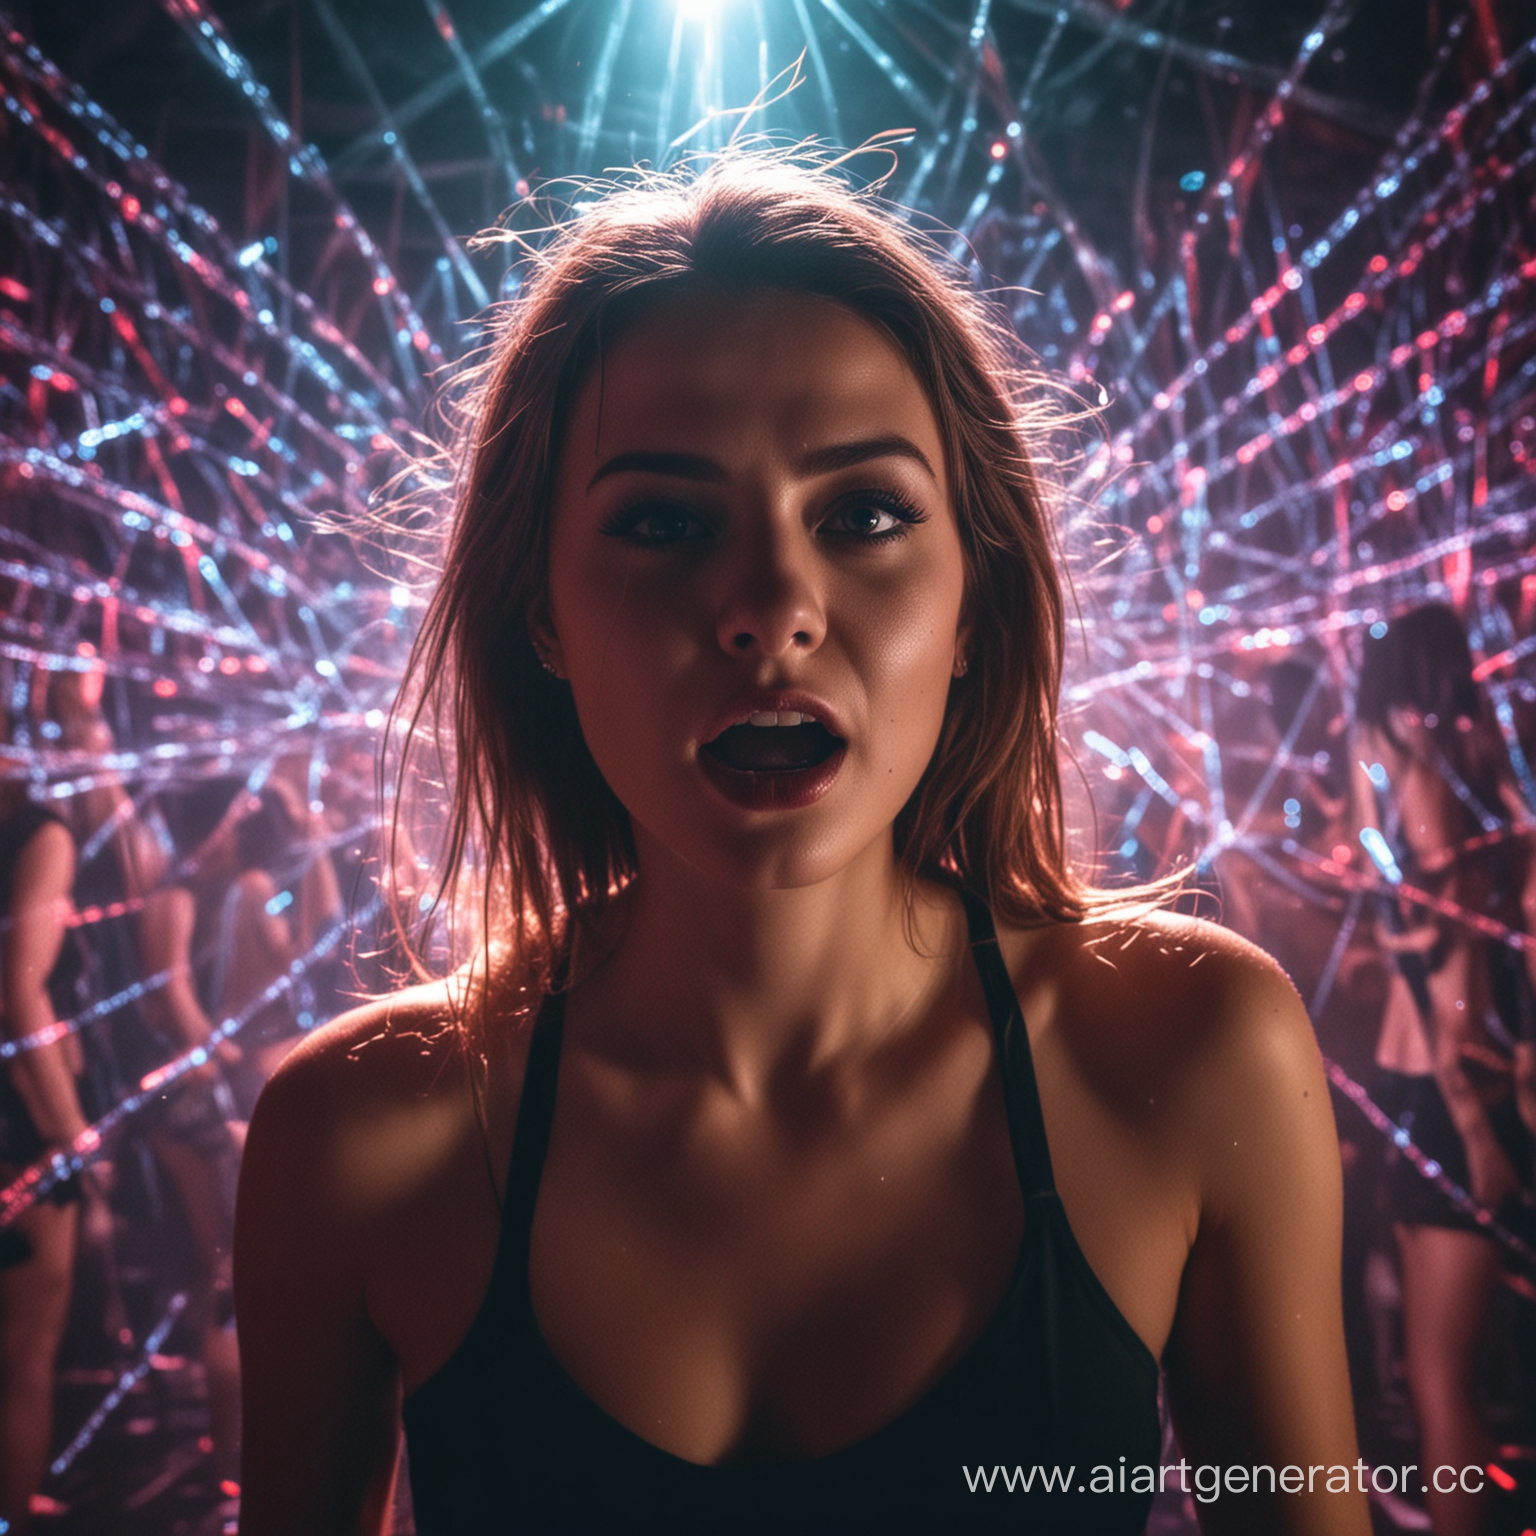 Девушка сходит с ума в тёмном клубе с яркими лазерами